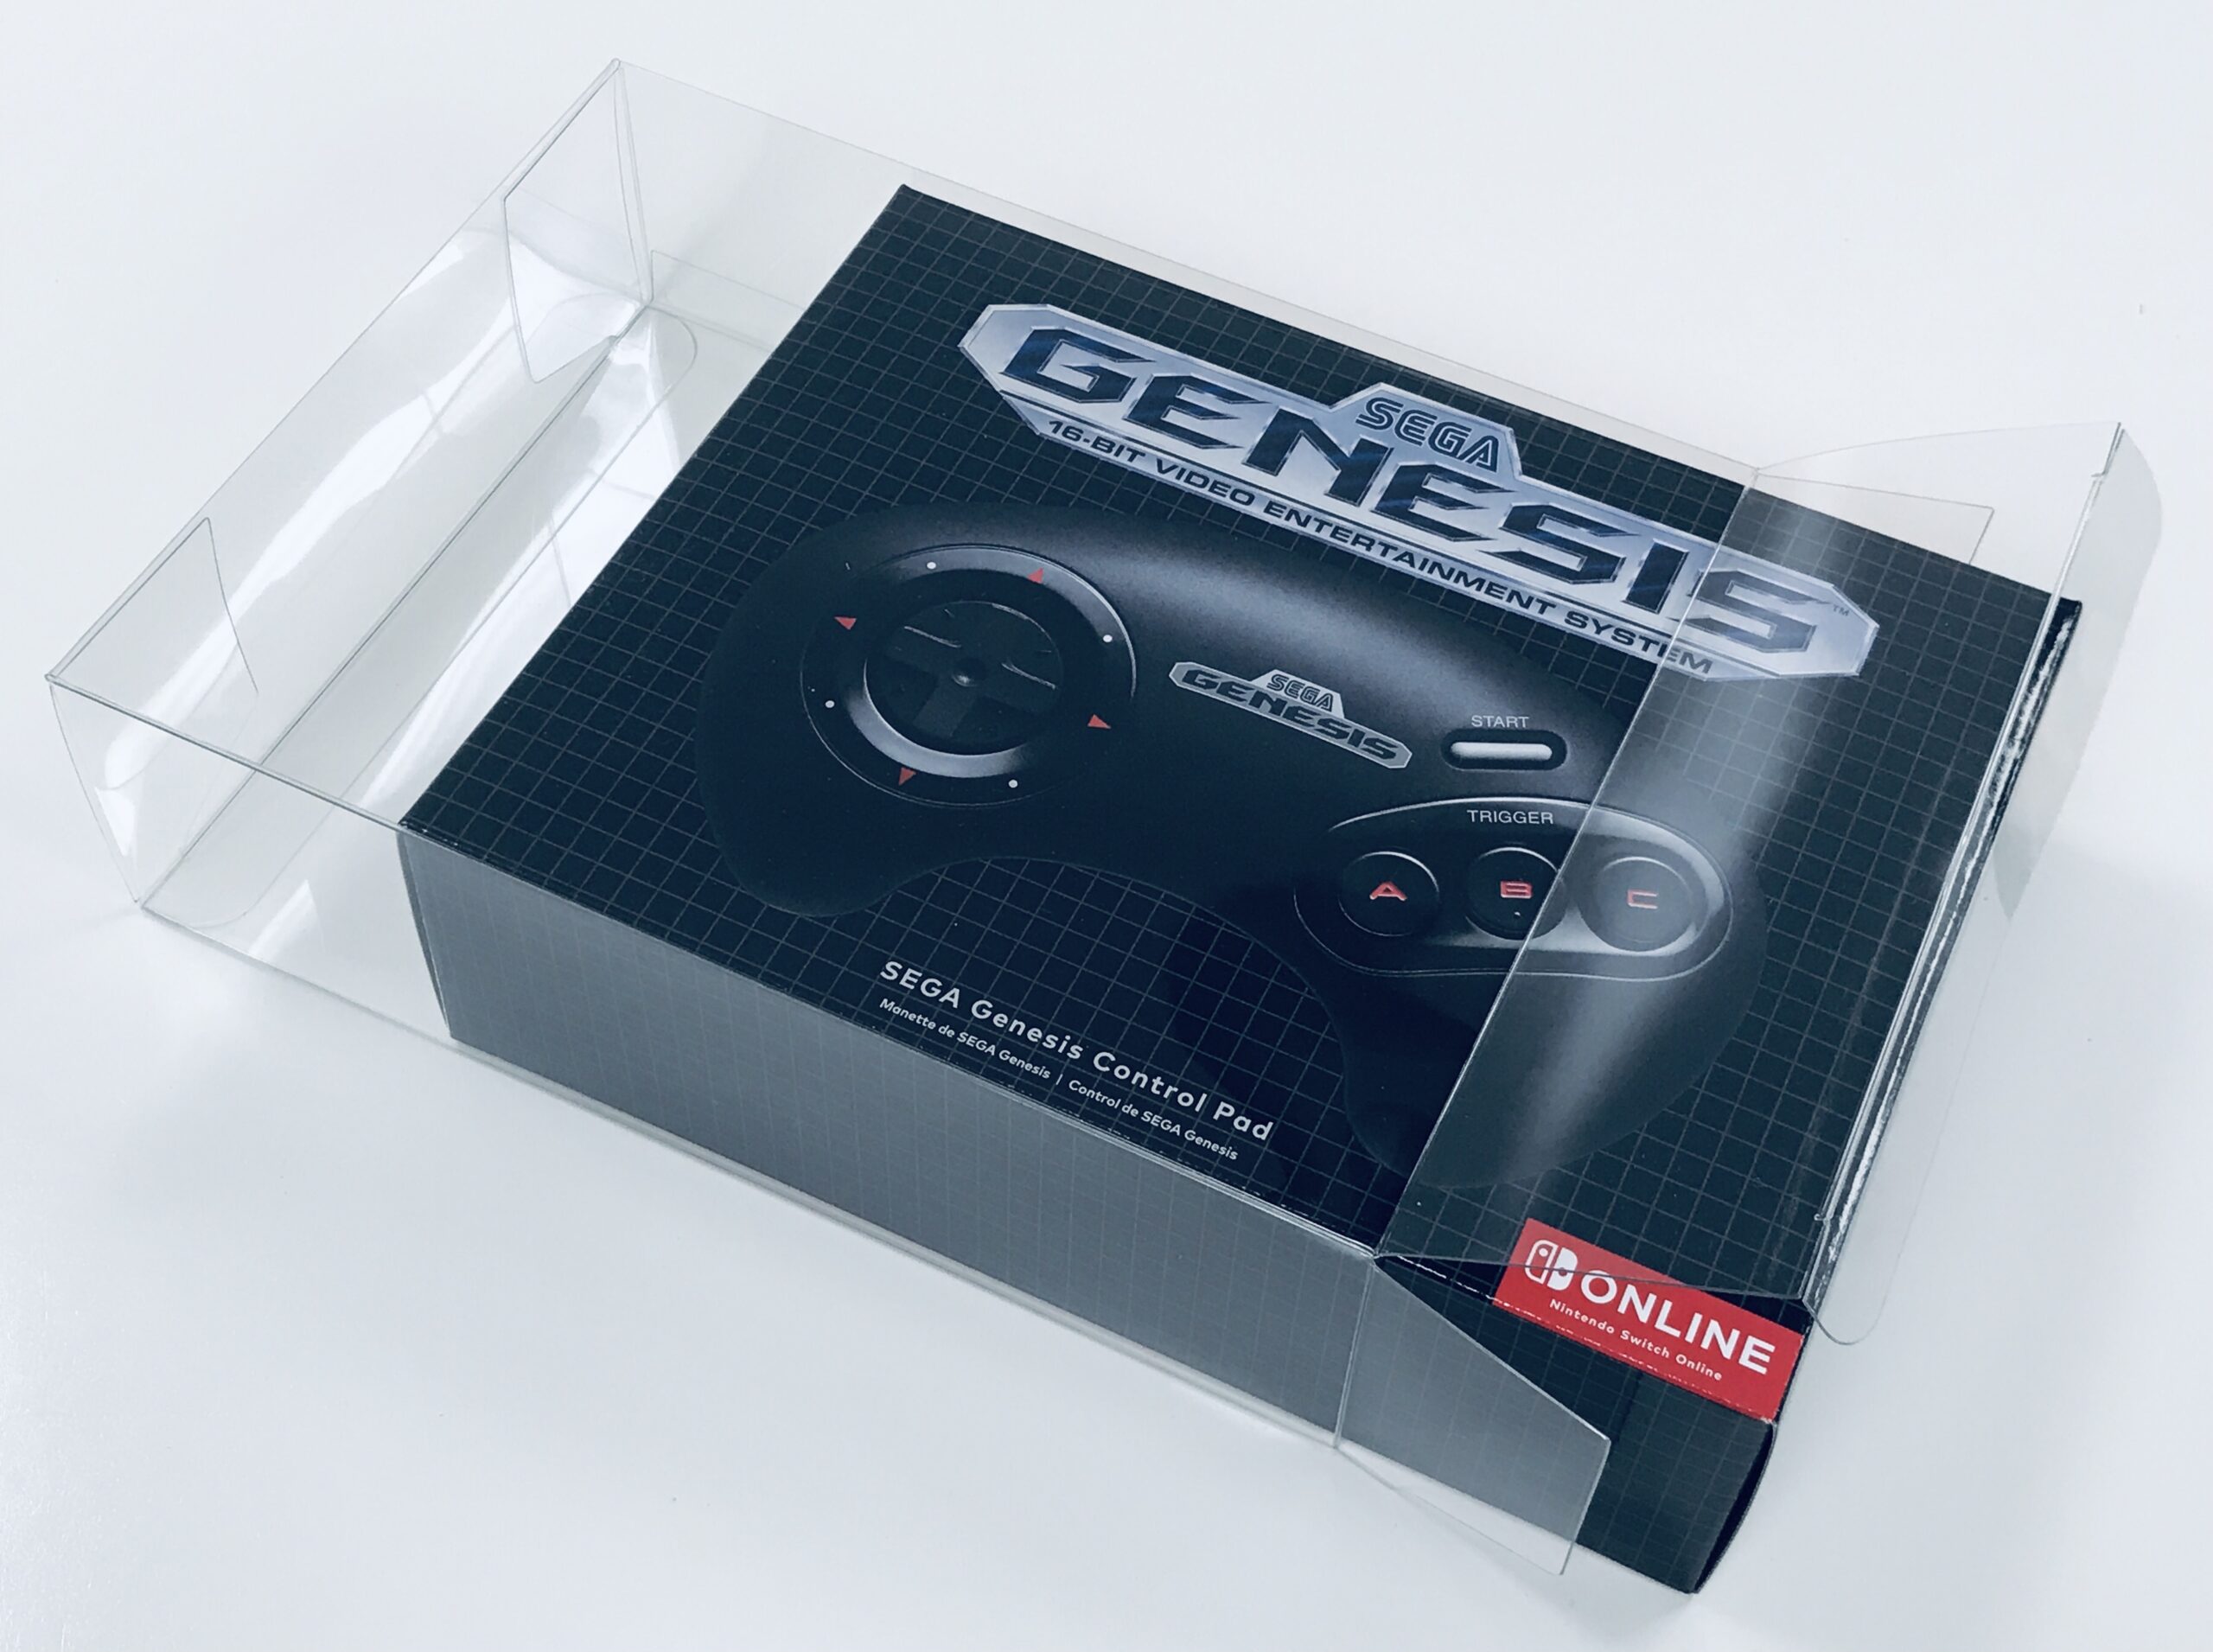 Nintendo Switch Online Sega Genesis Controller Box Protector 